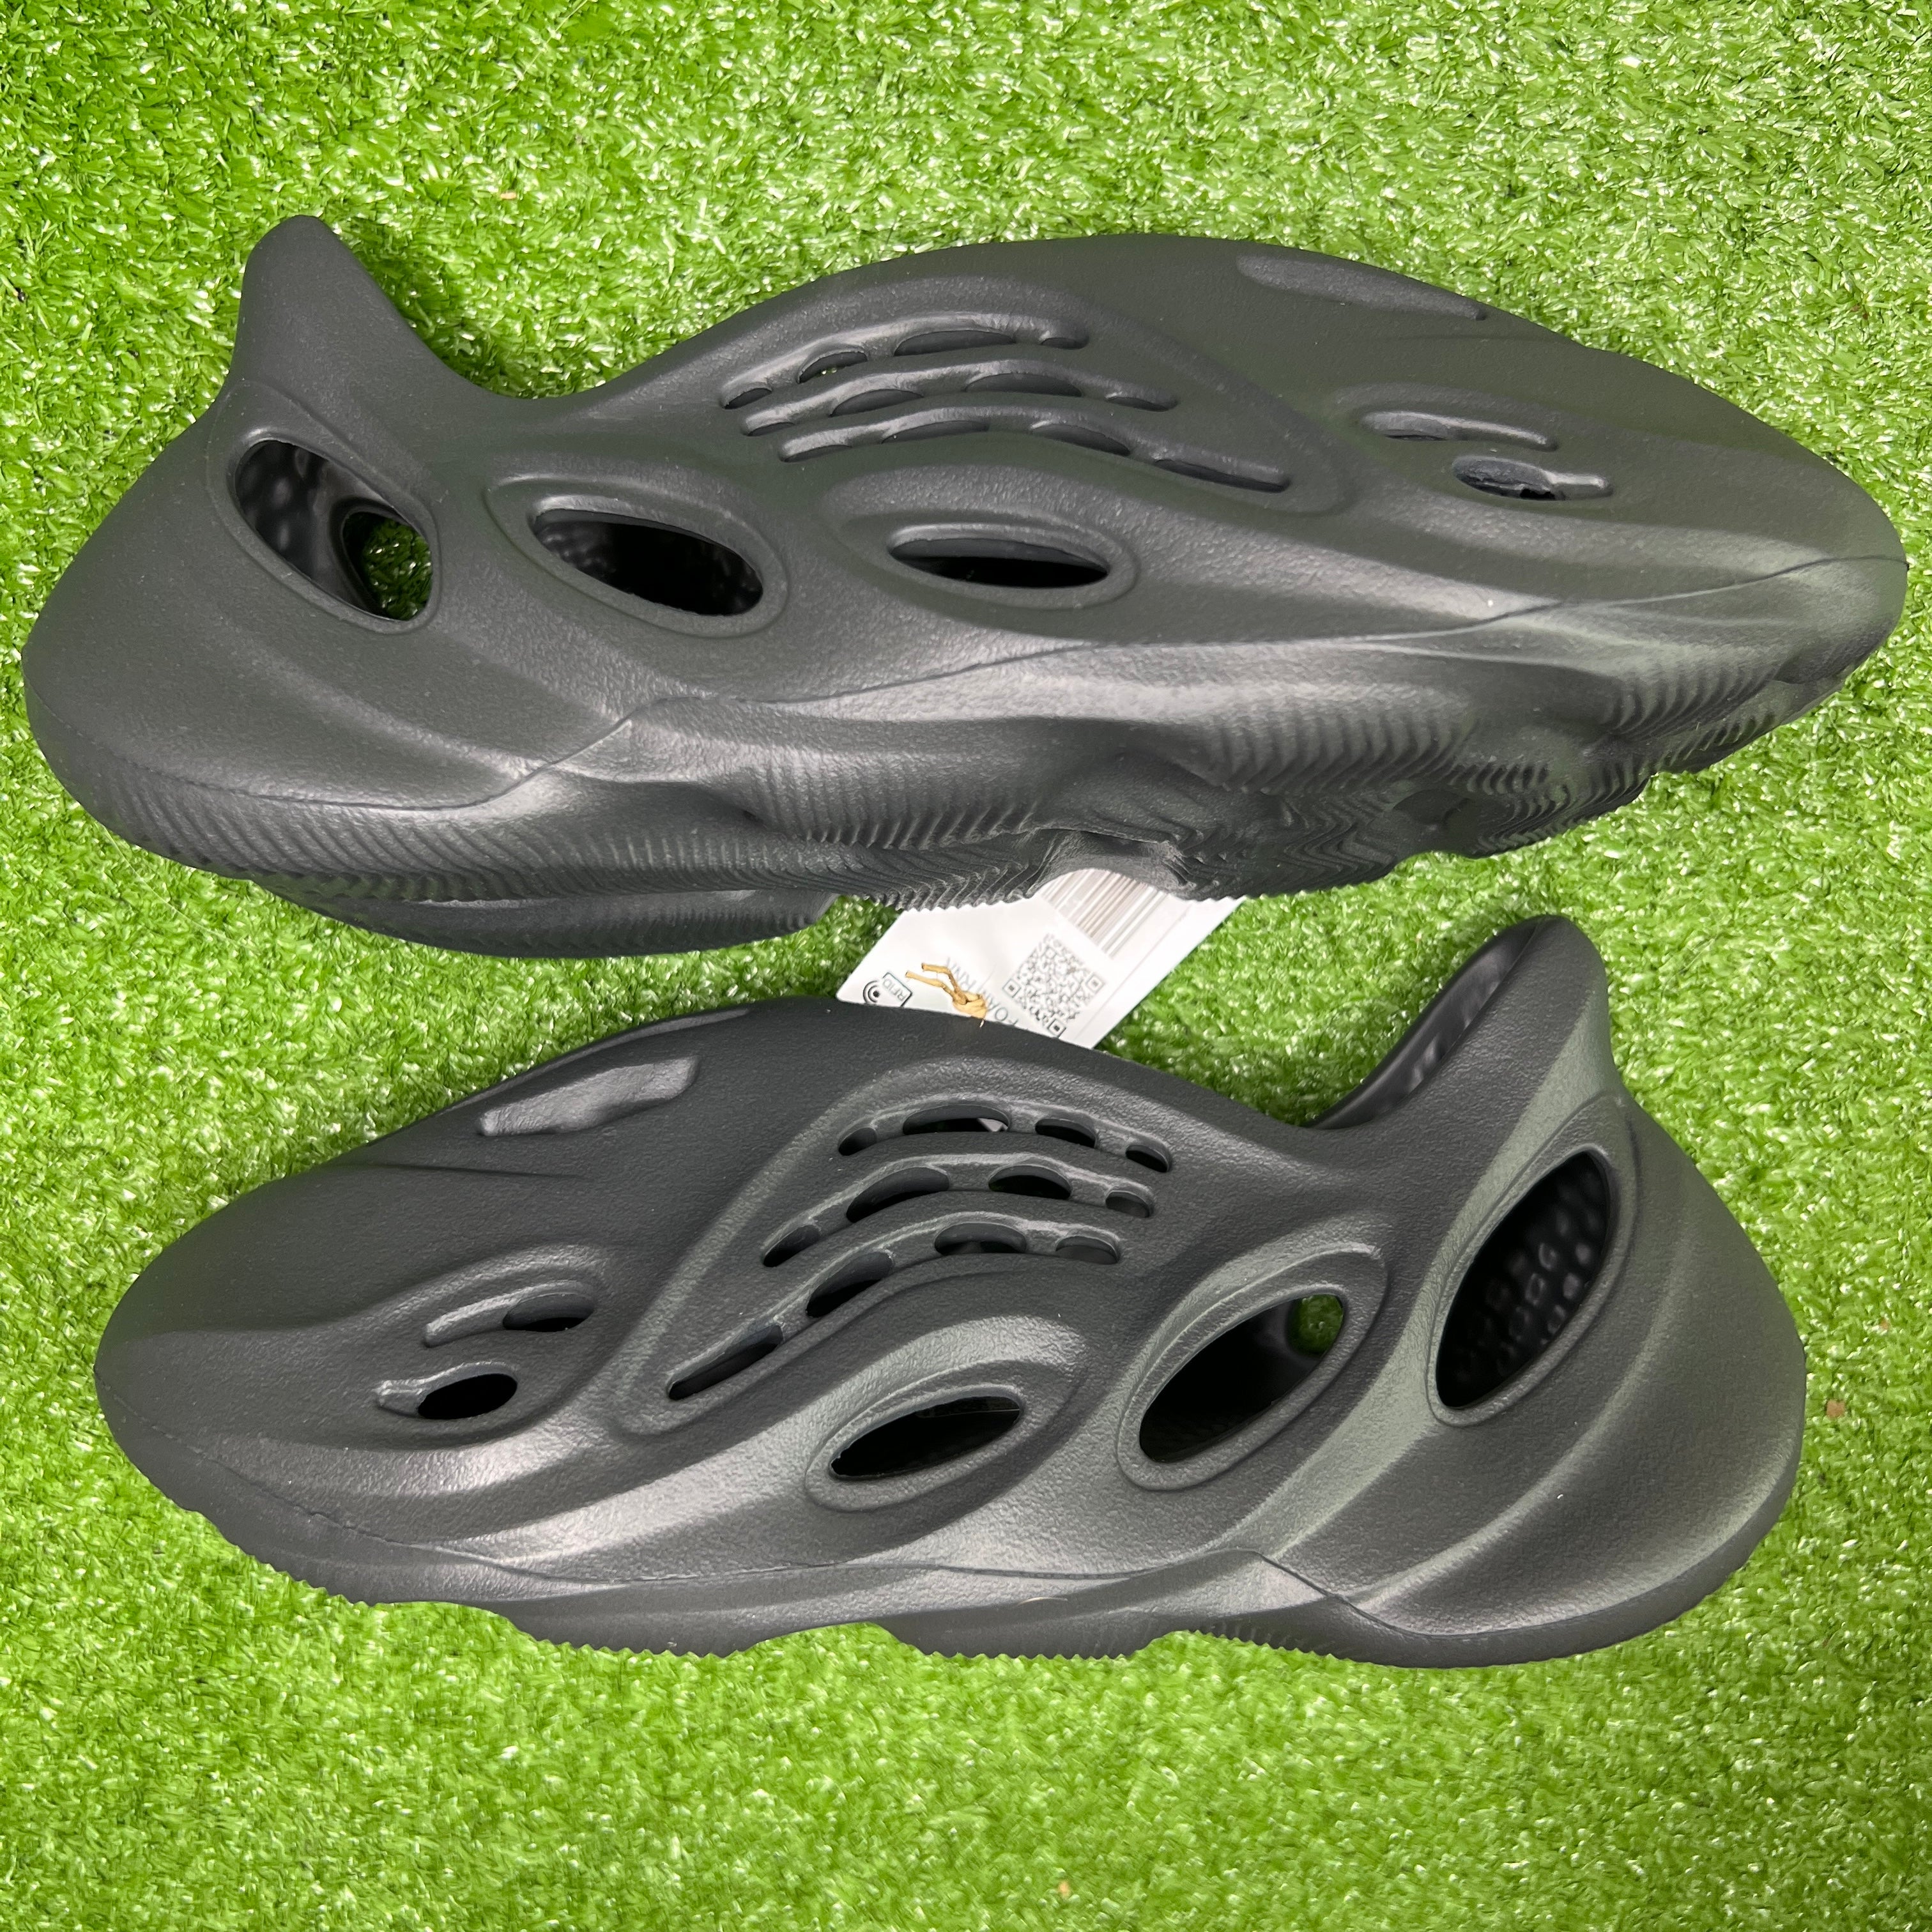 adidas Yeezy Foam Runner “Carbon” – Glorified Kicks